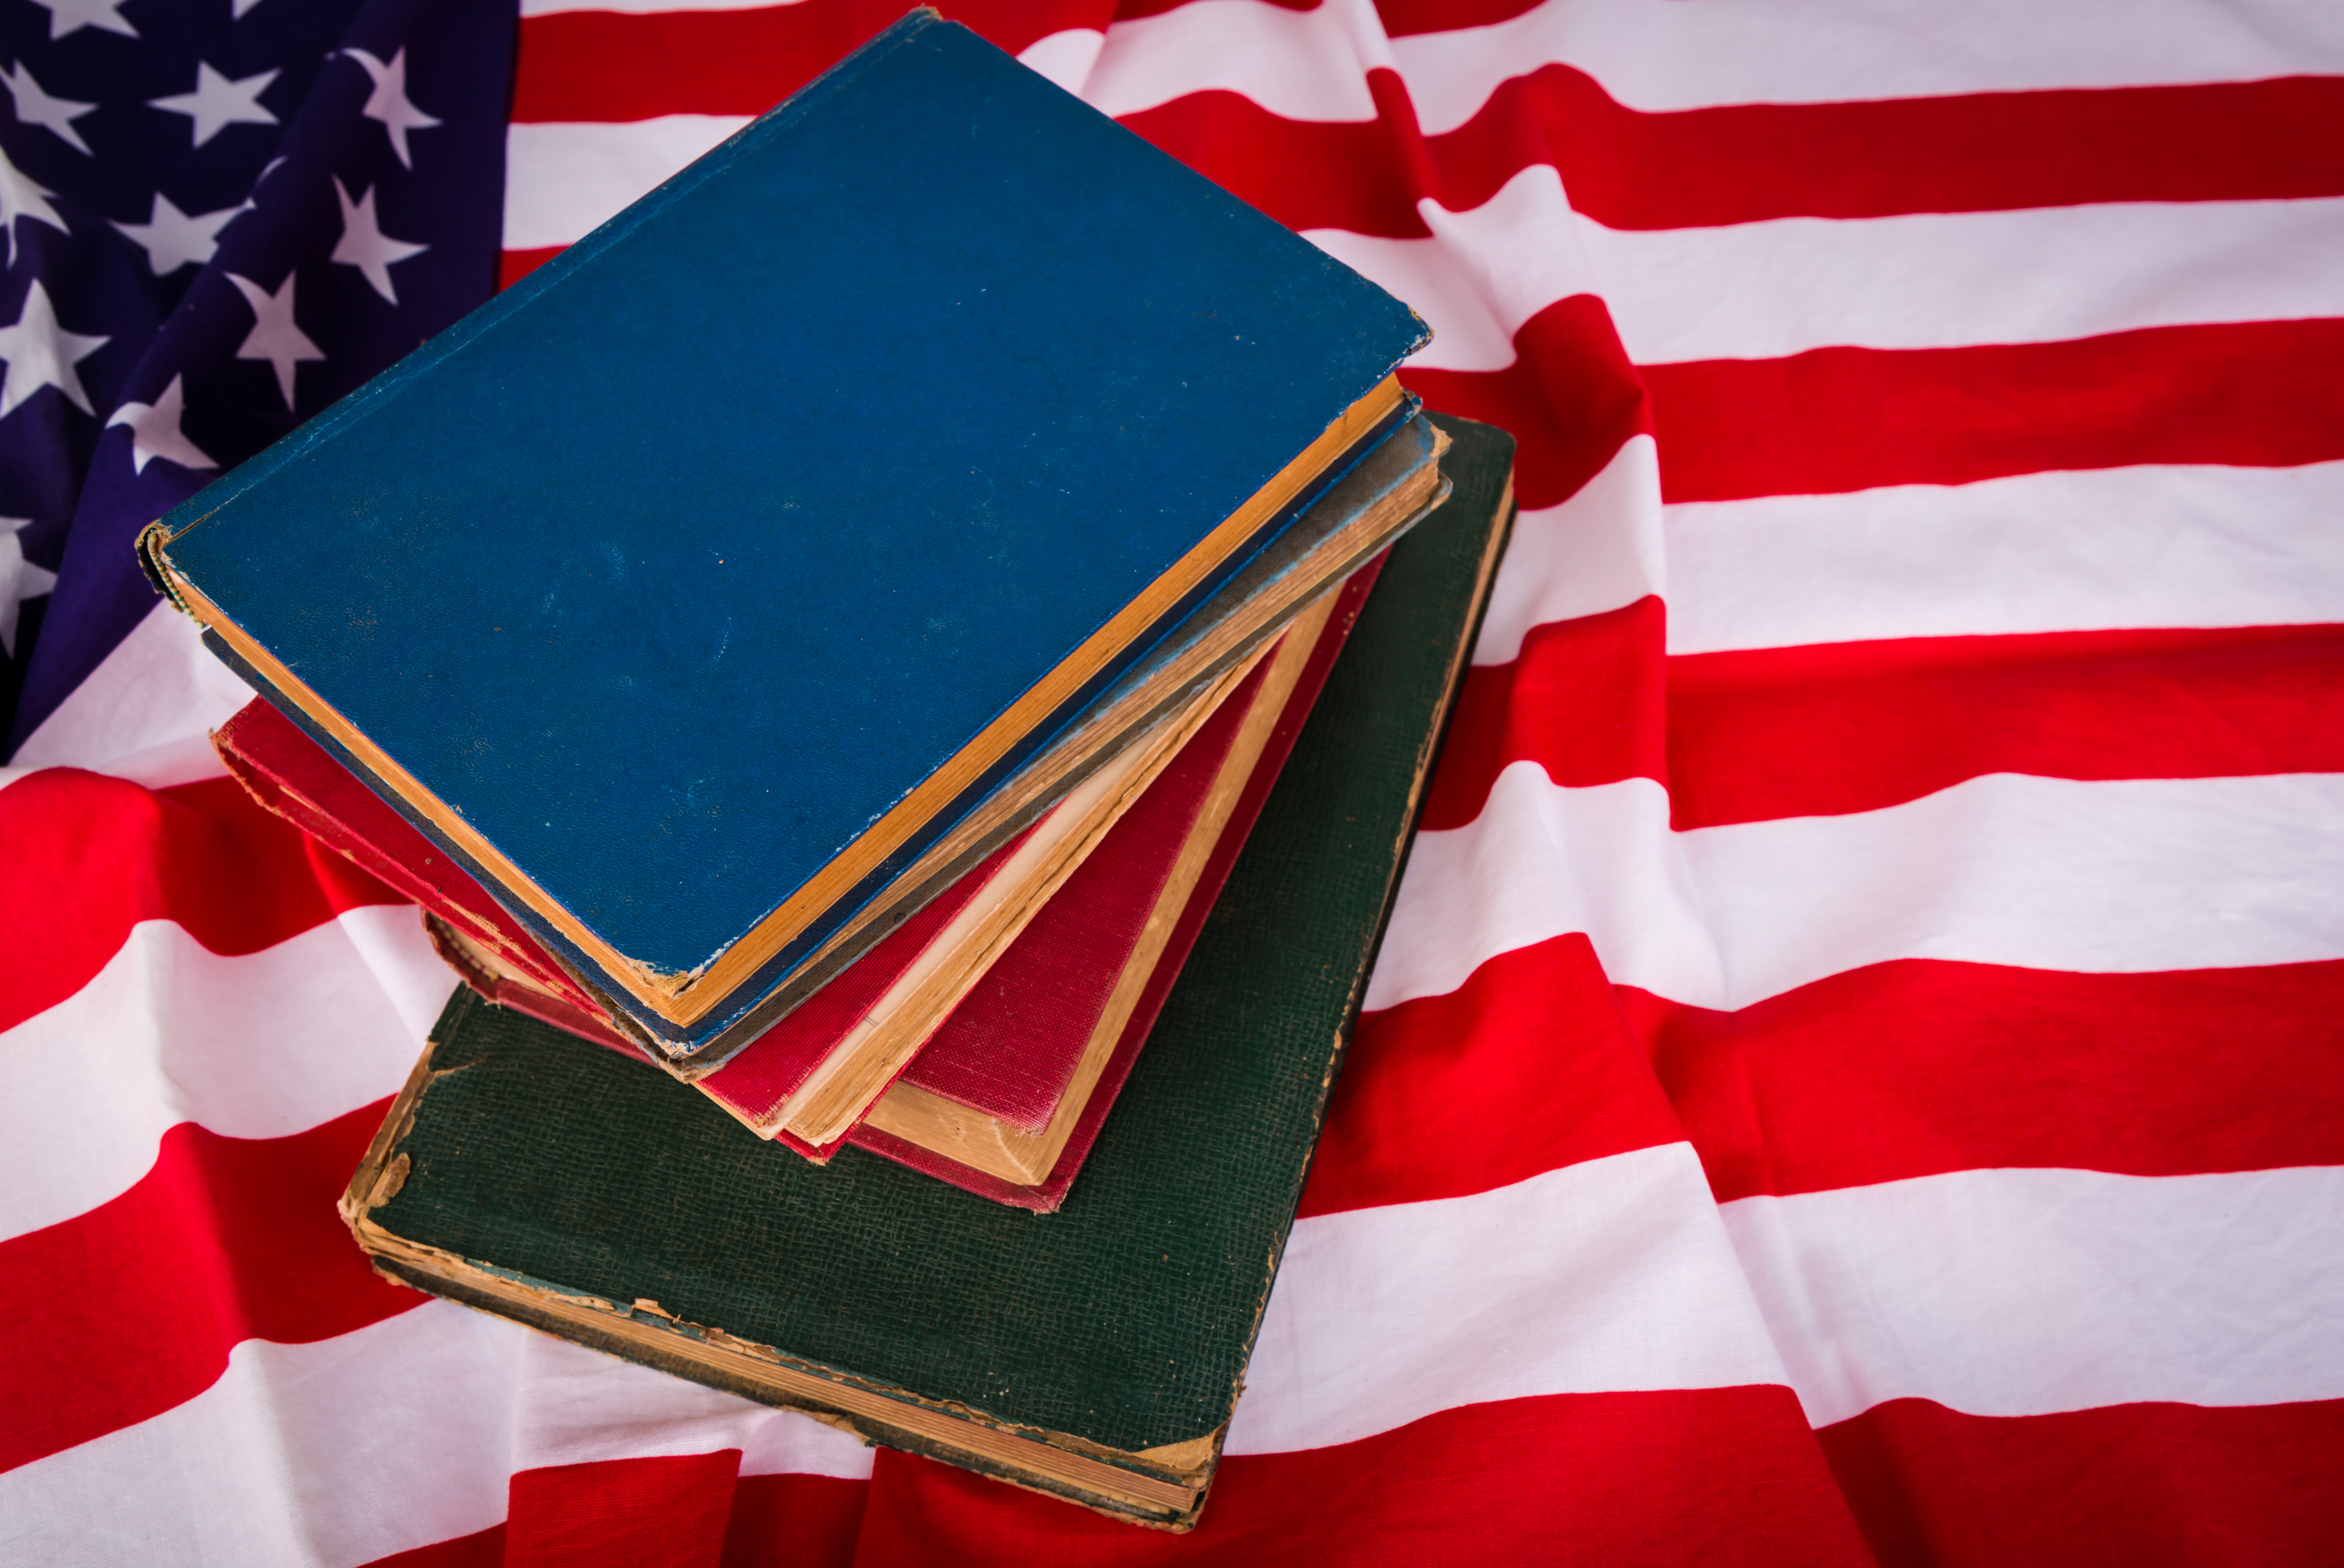 Books on American flag